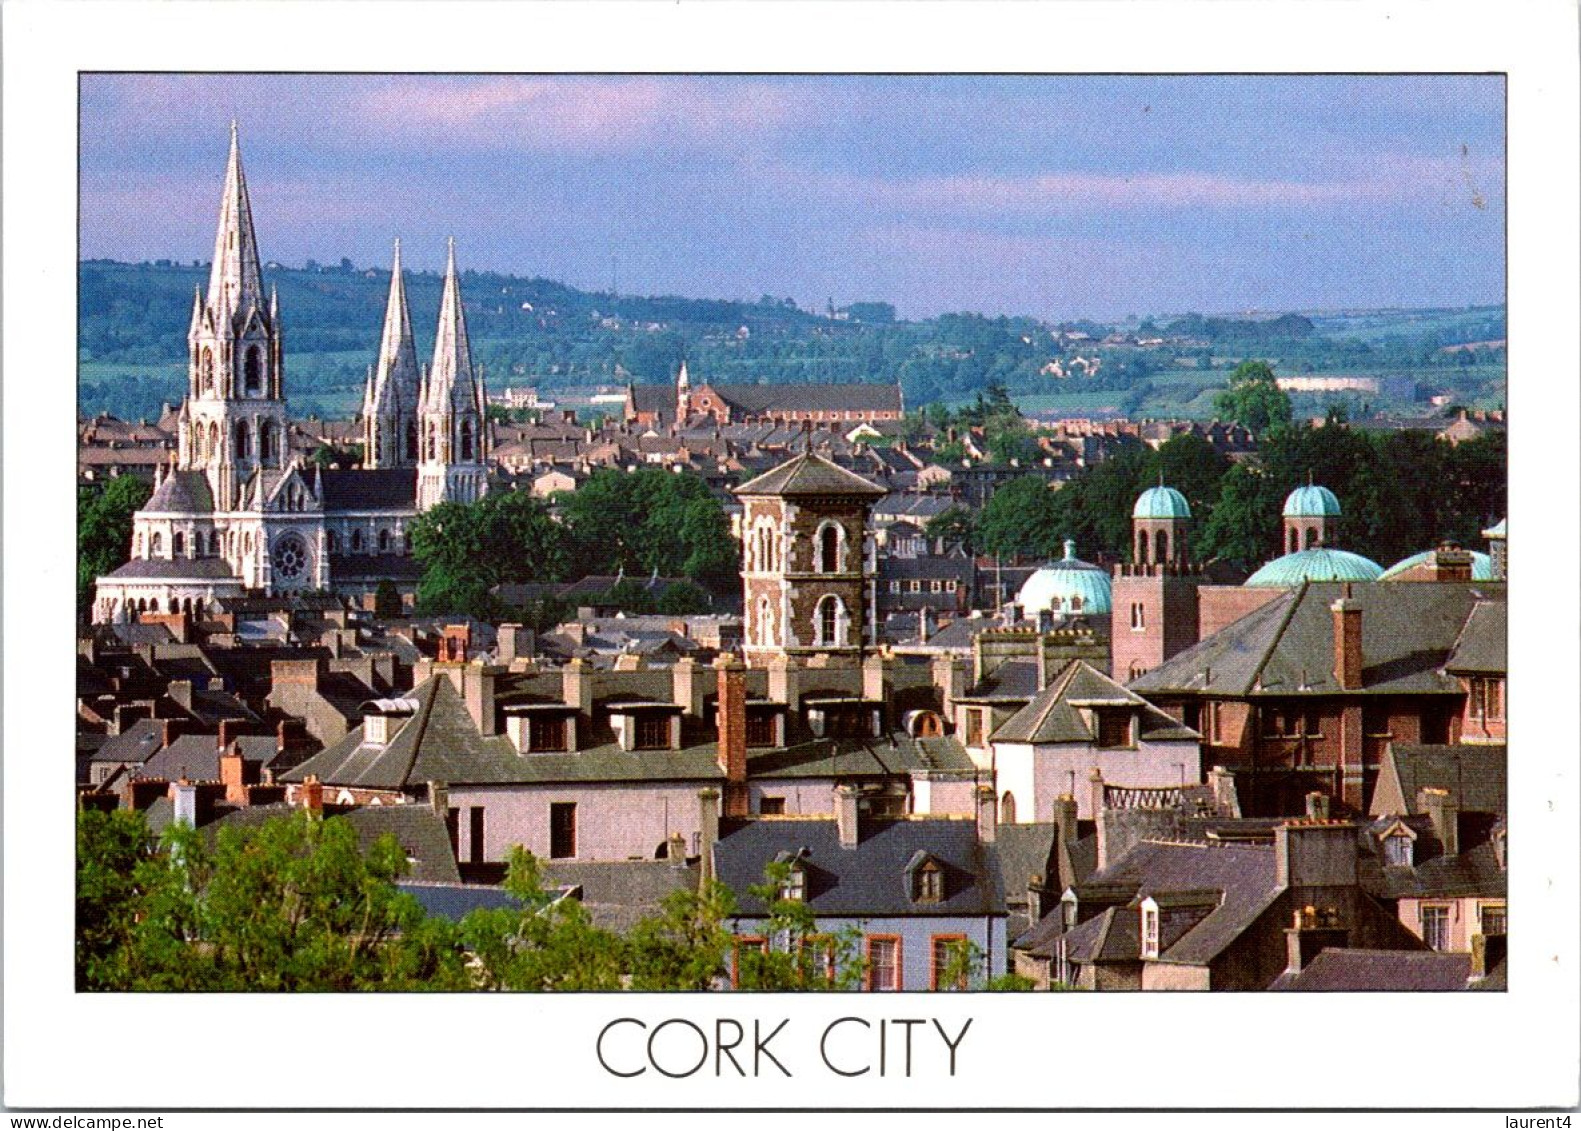 29-9-2023 (2 U 30) Ireland - Cork City (Insight) - Cork